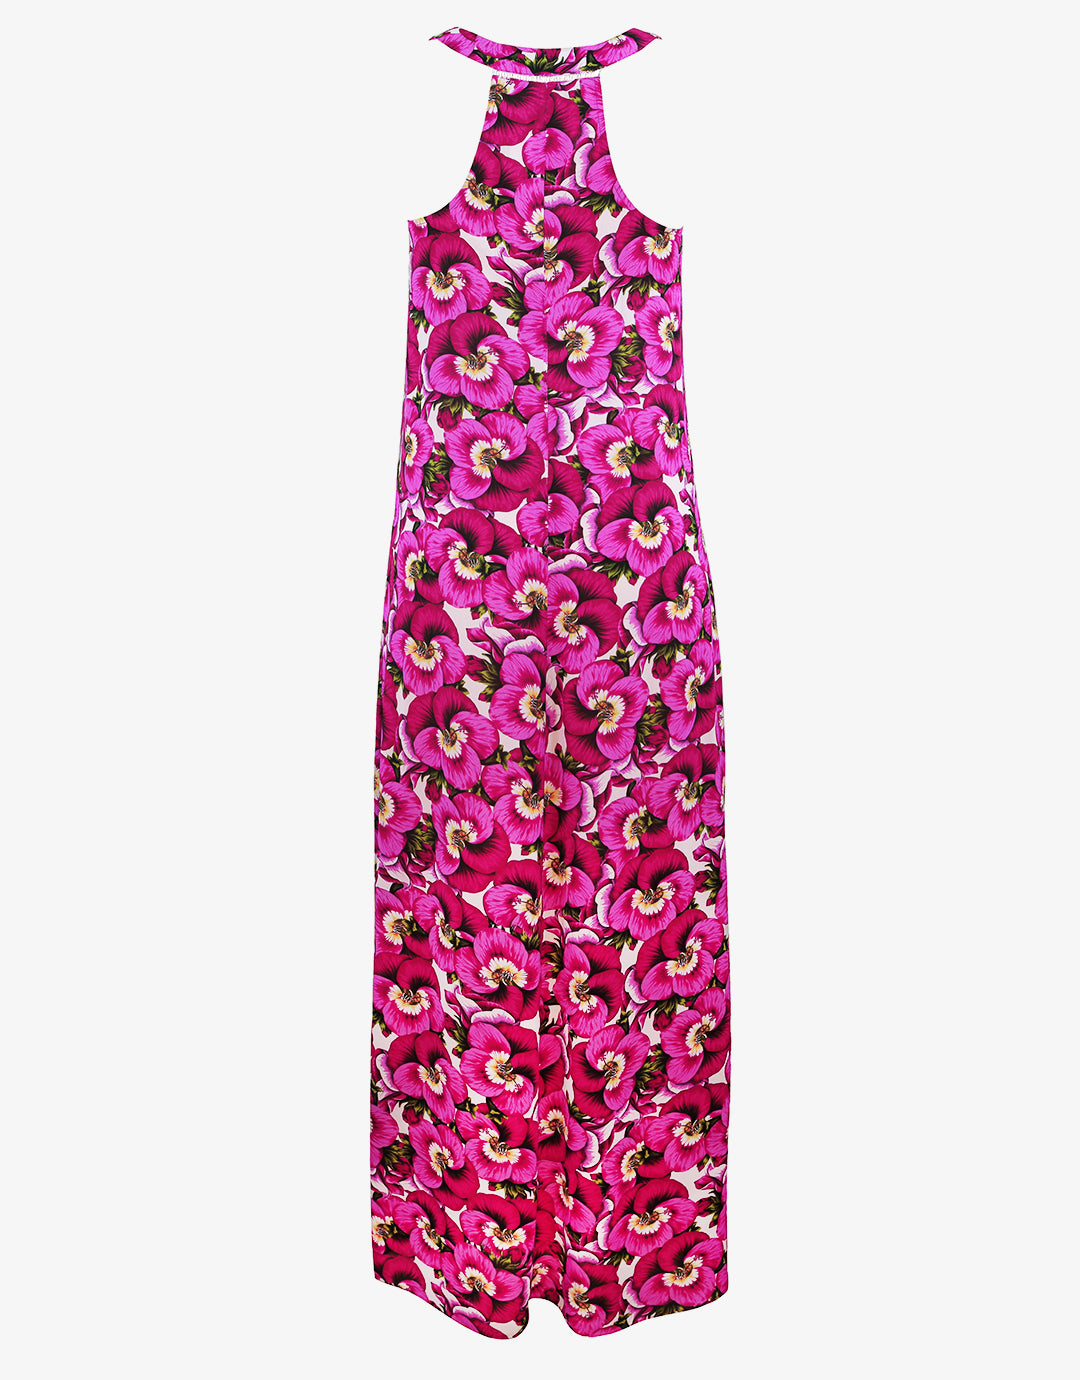 Revelation Maxi Dress - Pansy Pink - Simply Beach UK